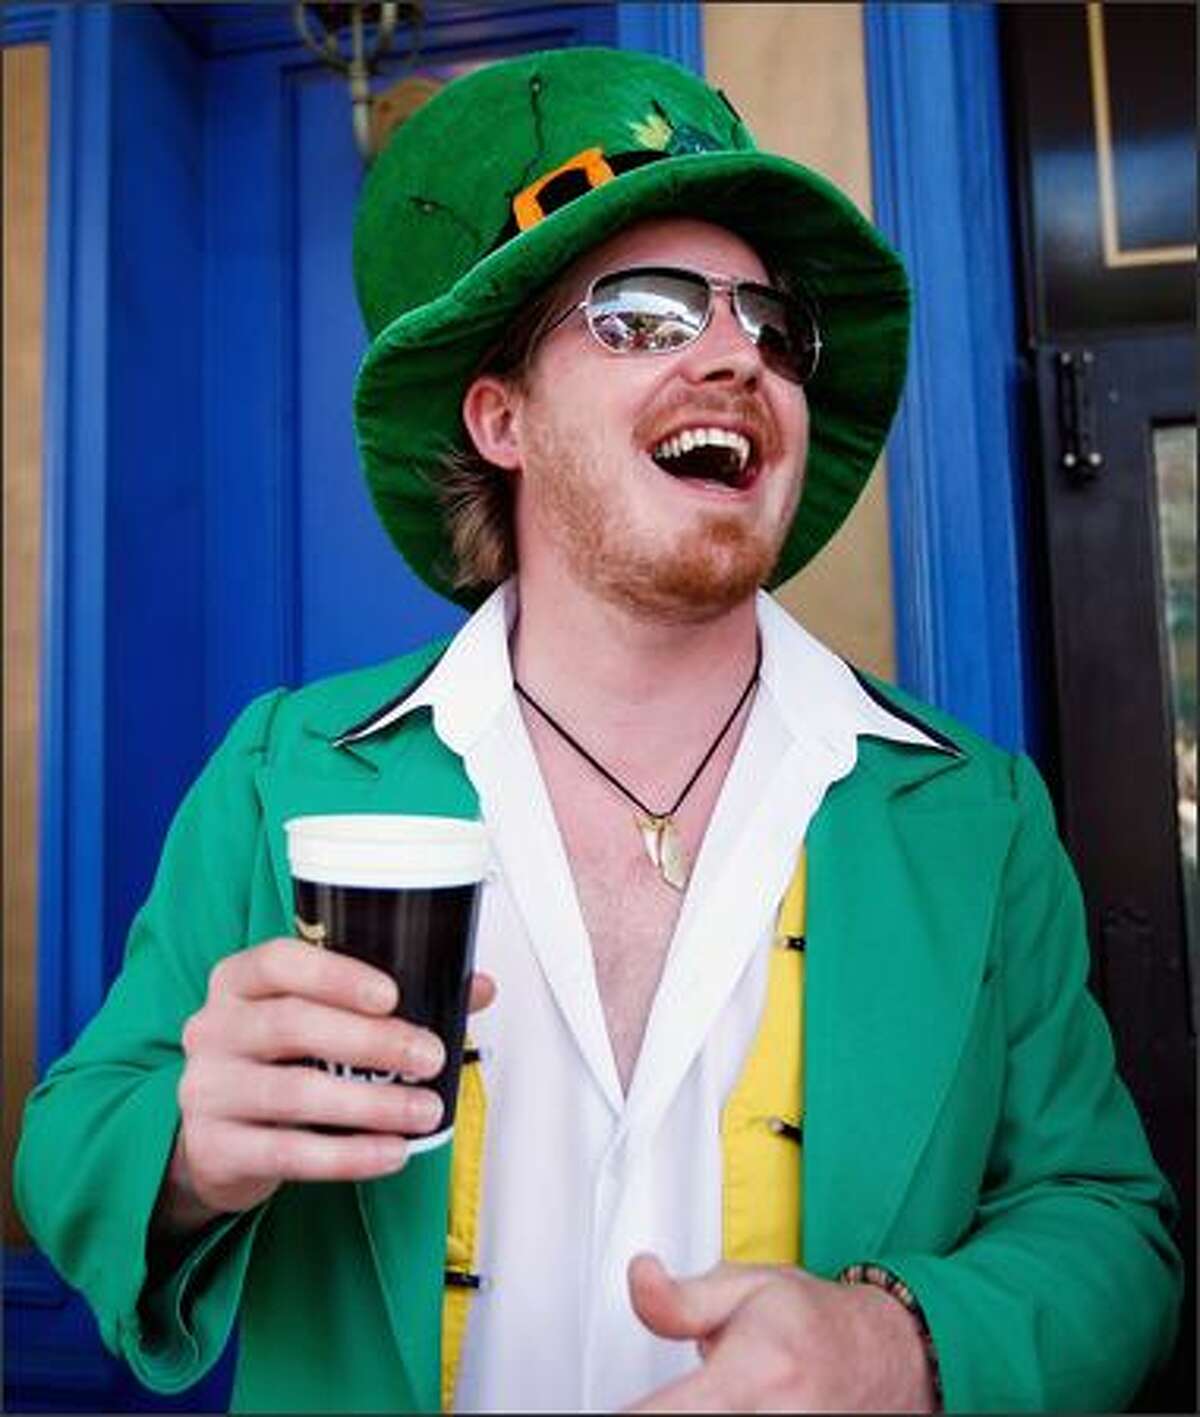 Donny Shanahan enjoys the festivities on St. Patrick's Day at the Muddy Farmer Bar in Auckland, New Zealand.